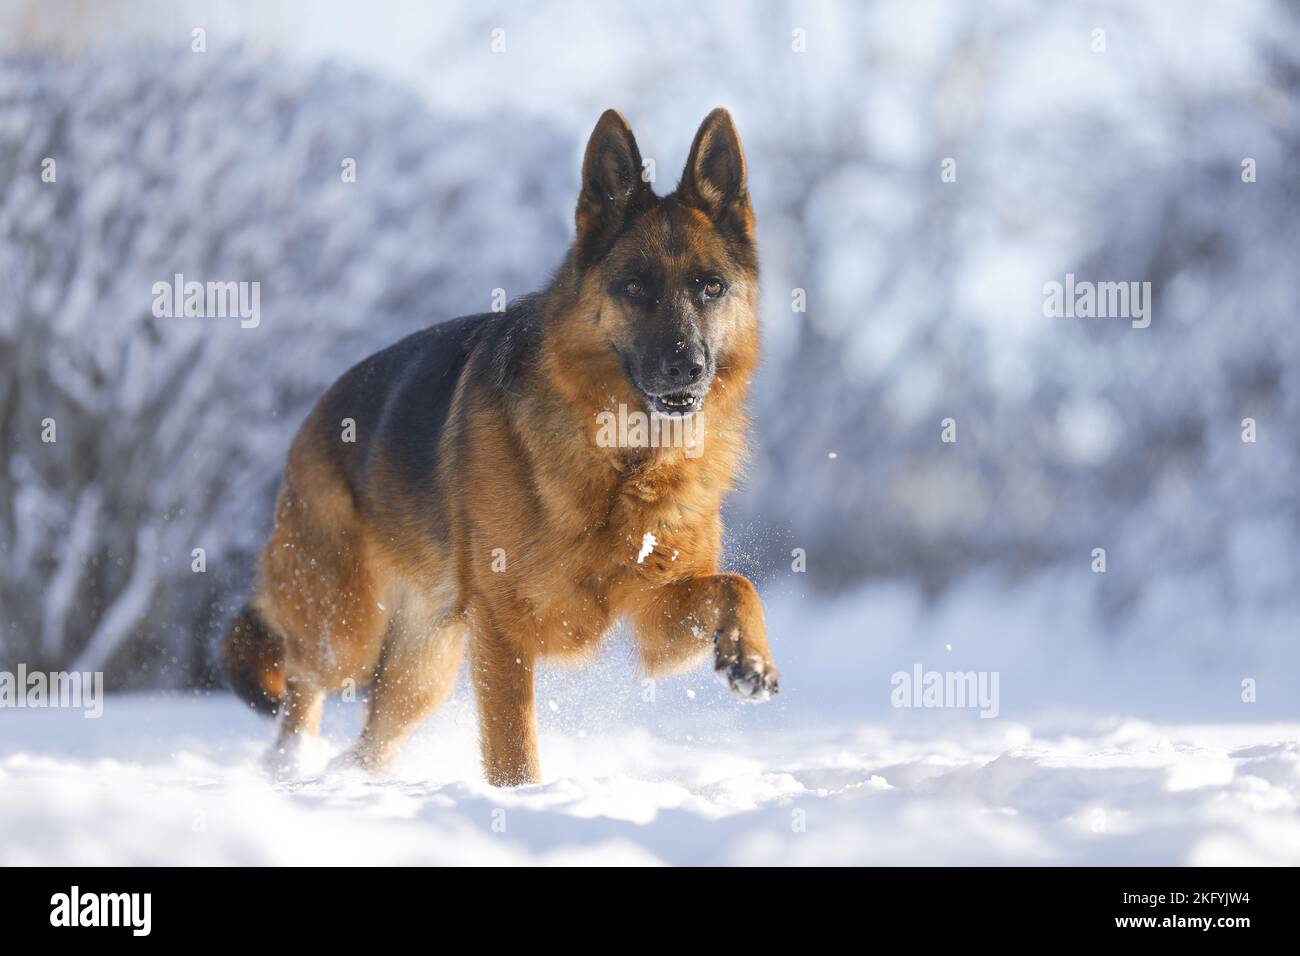 German Shepherd runs through the snow Stock Photo